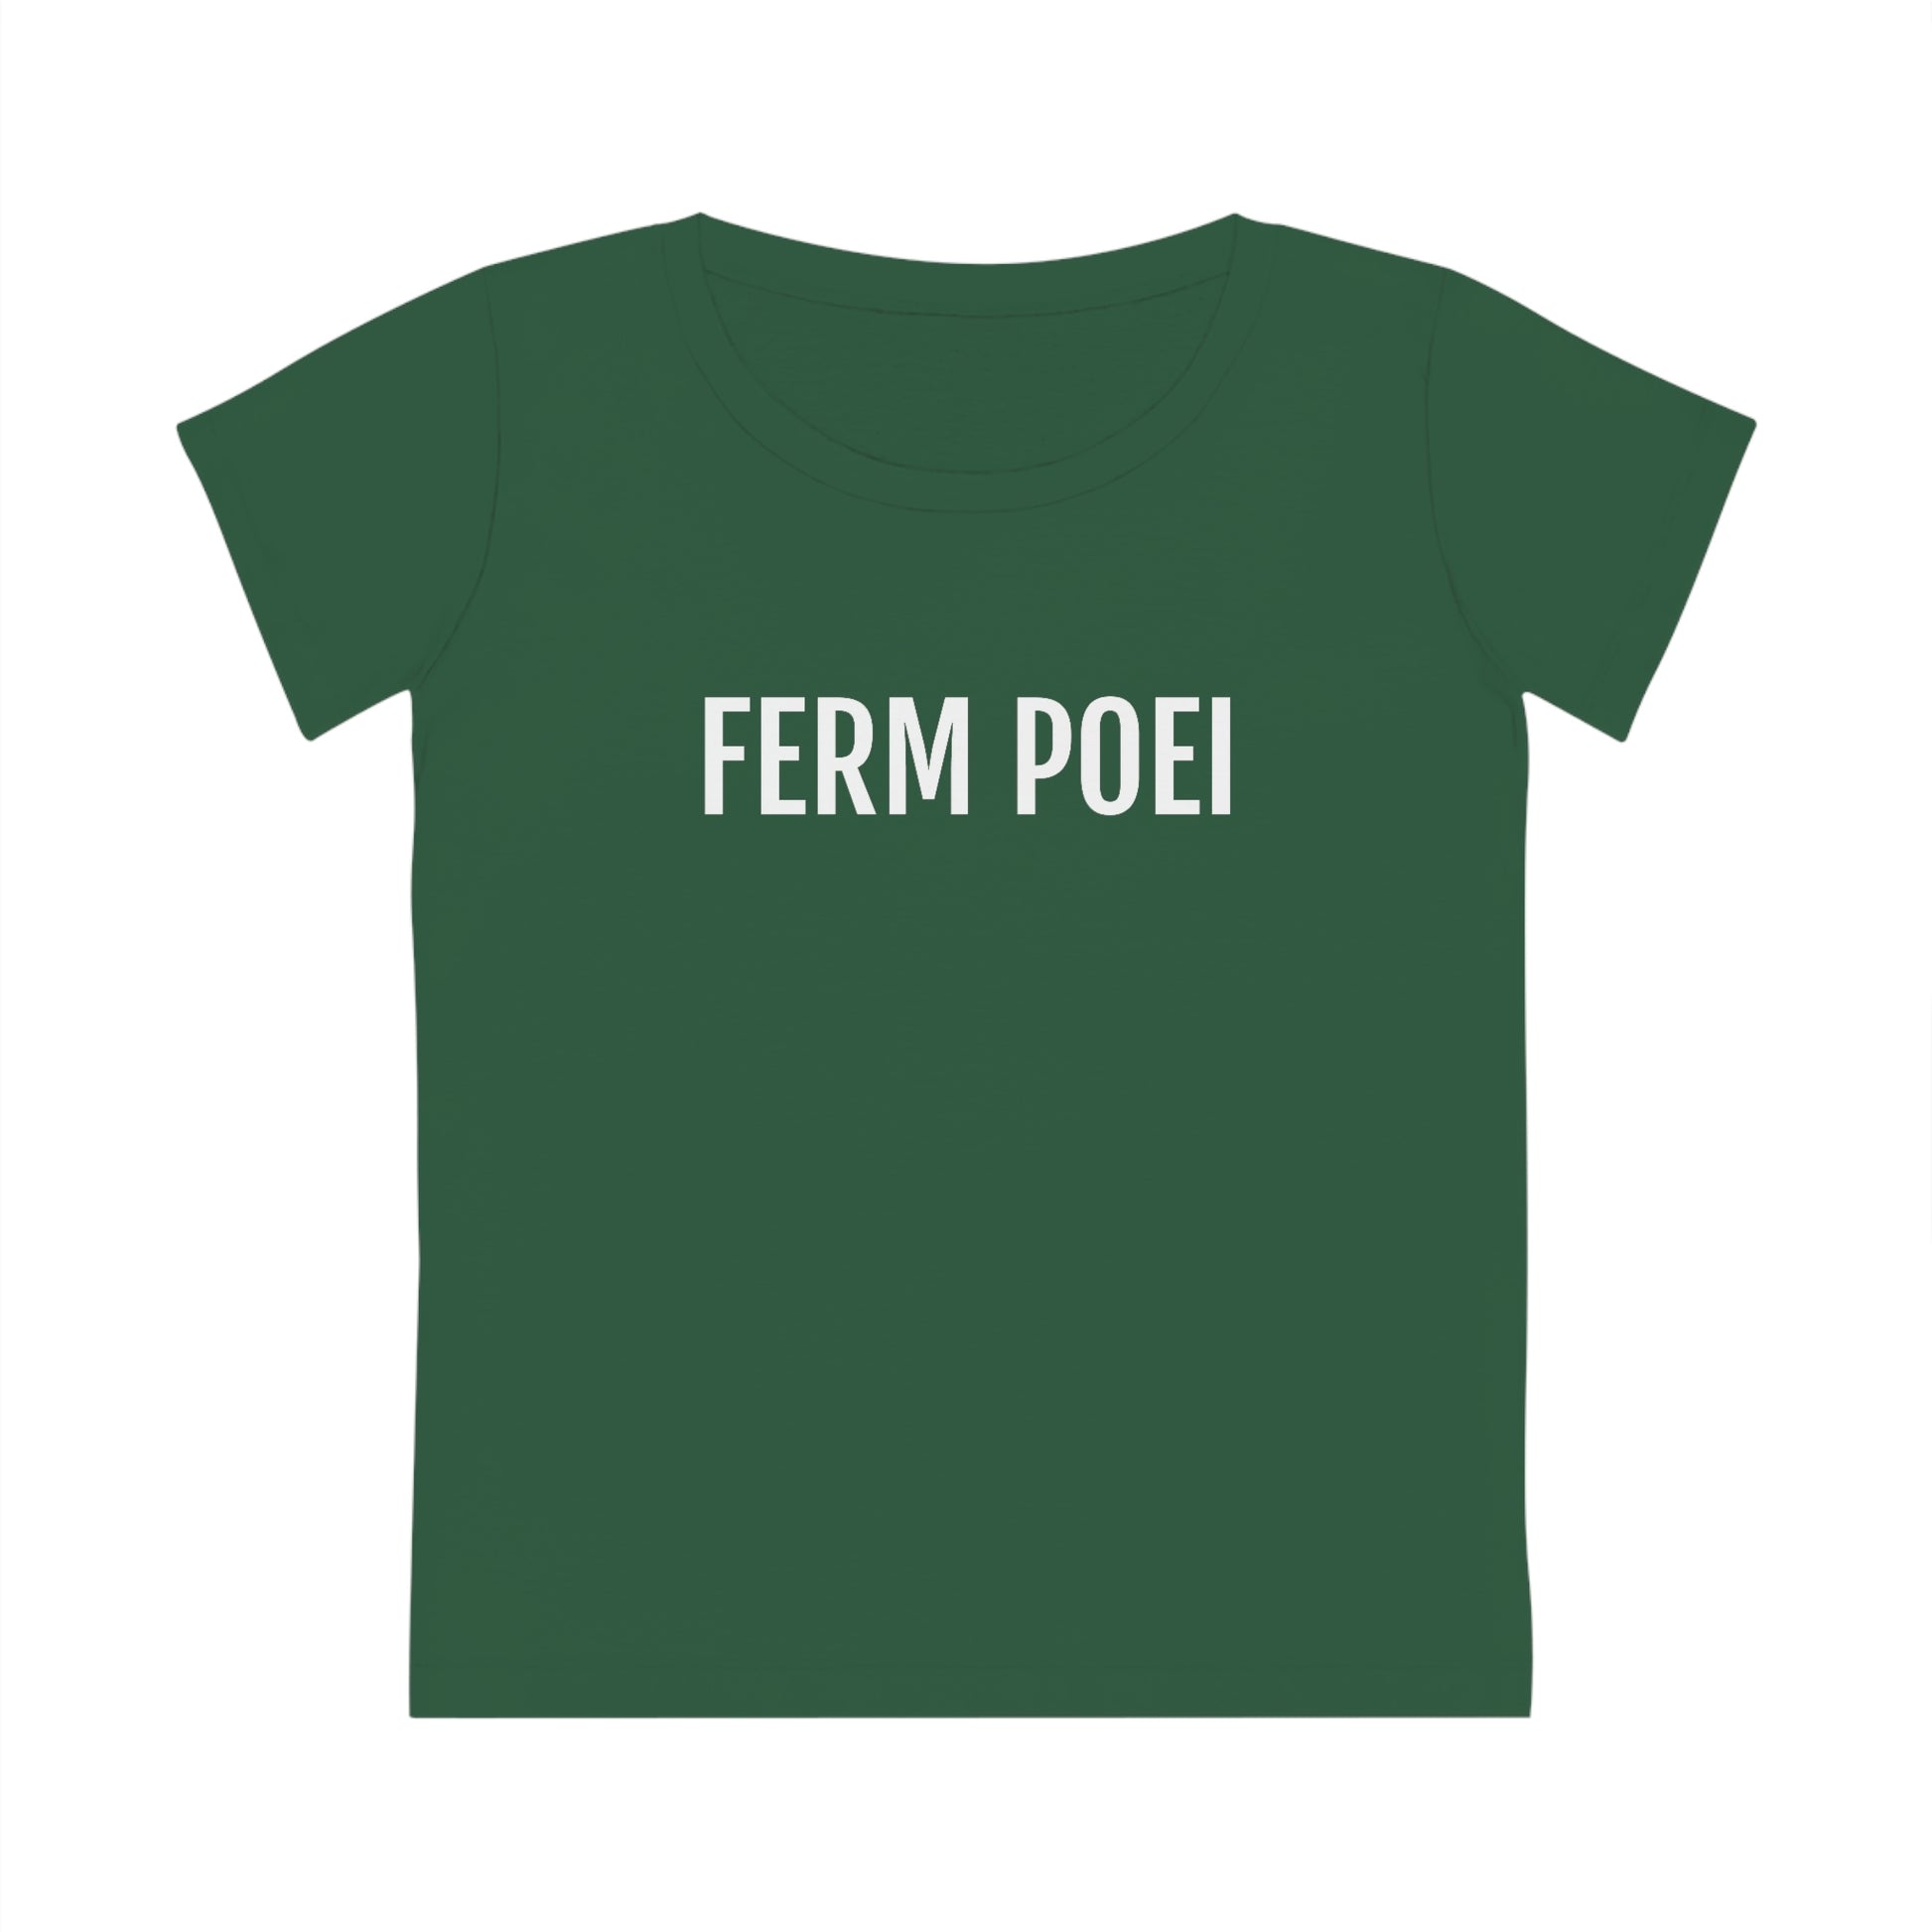 FERM POEI | Dames T-Shirt uit Limburg